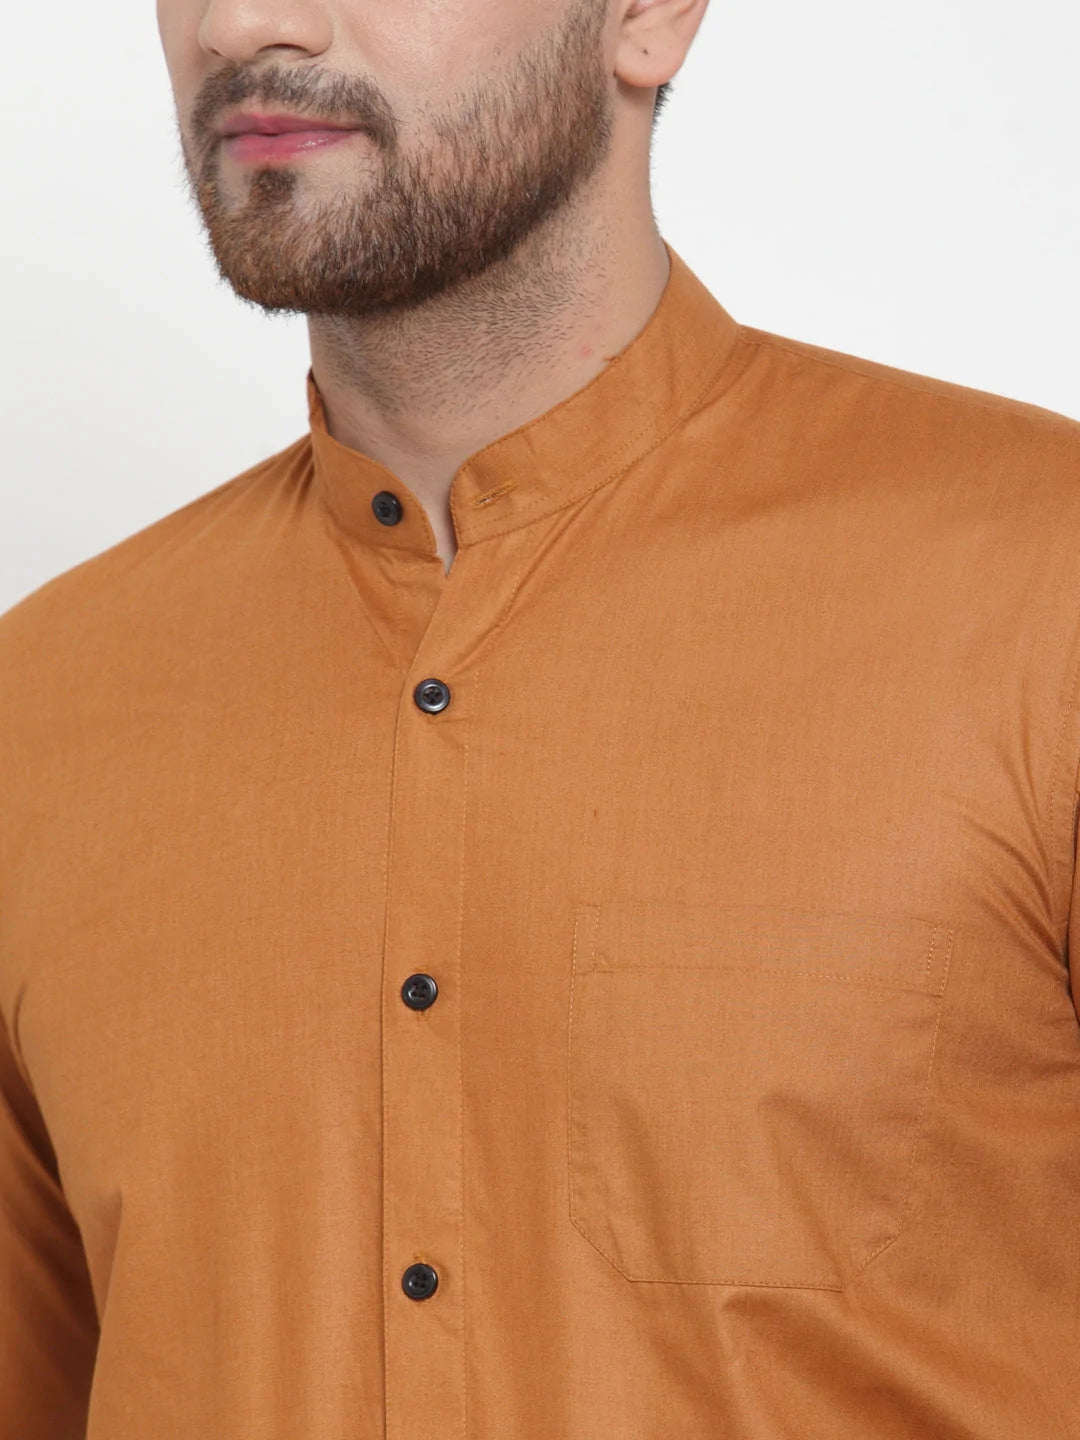 Jainish Rust Men's Cotton Solid Mandarin Collar Formal Shirts ( SF 726Rust )